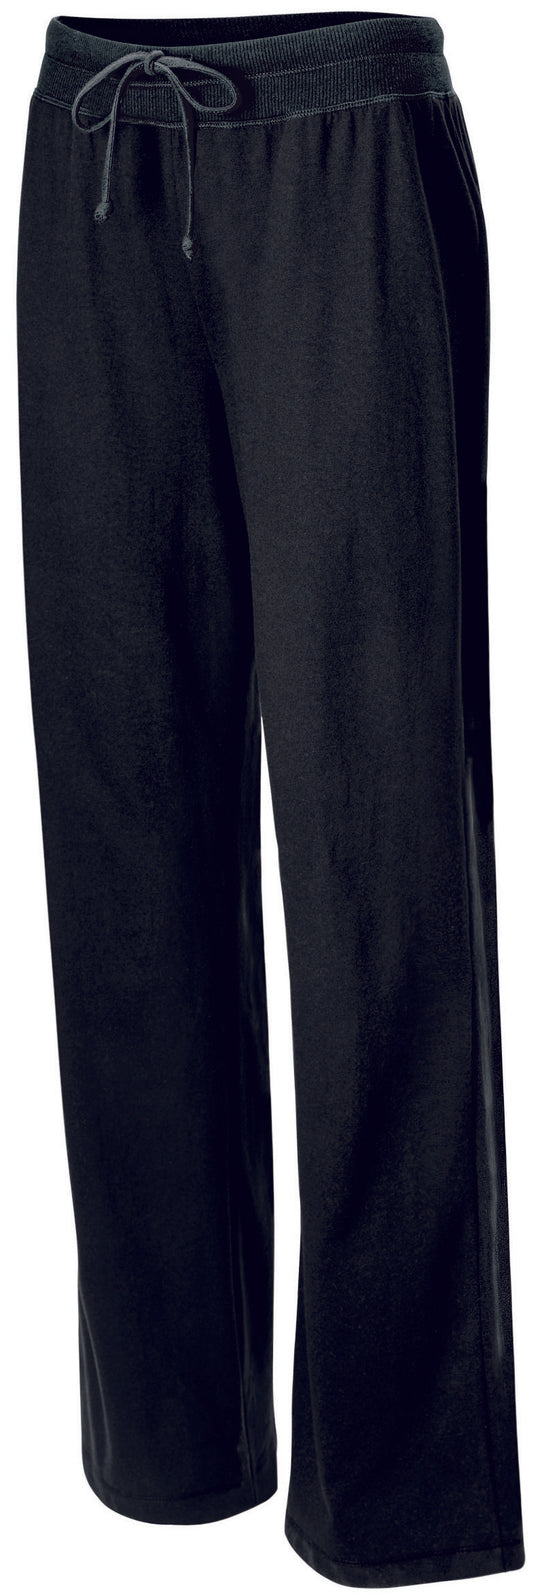 Champion Women's Favorite Pants Jersey # 8230